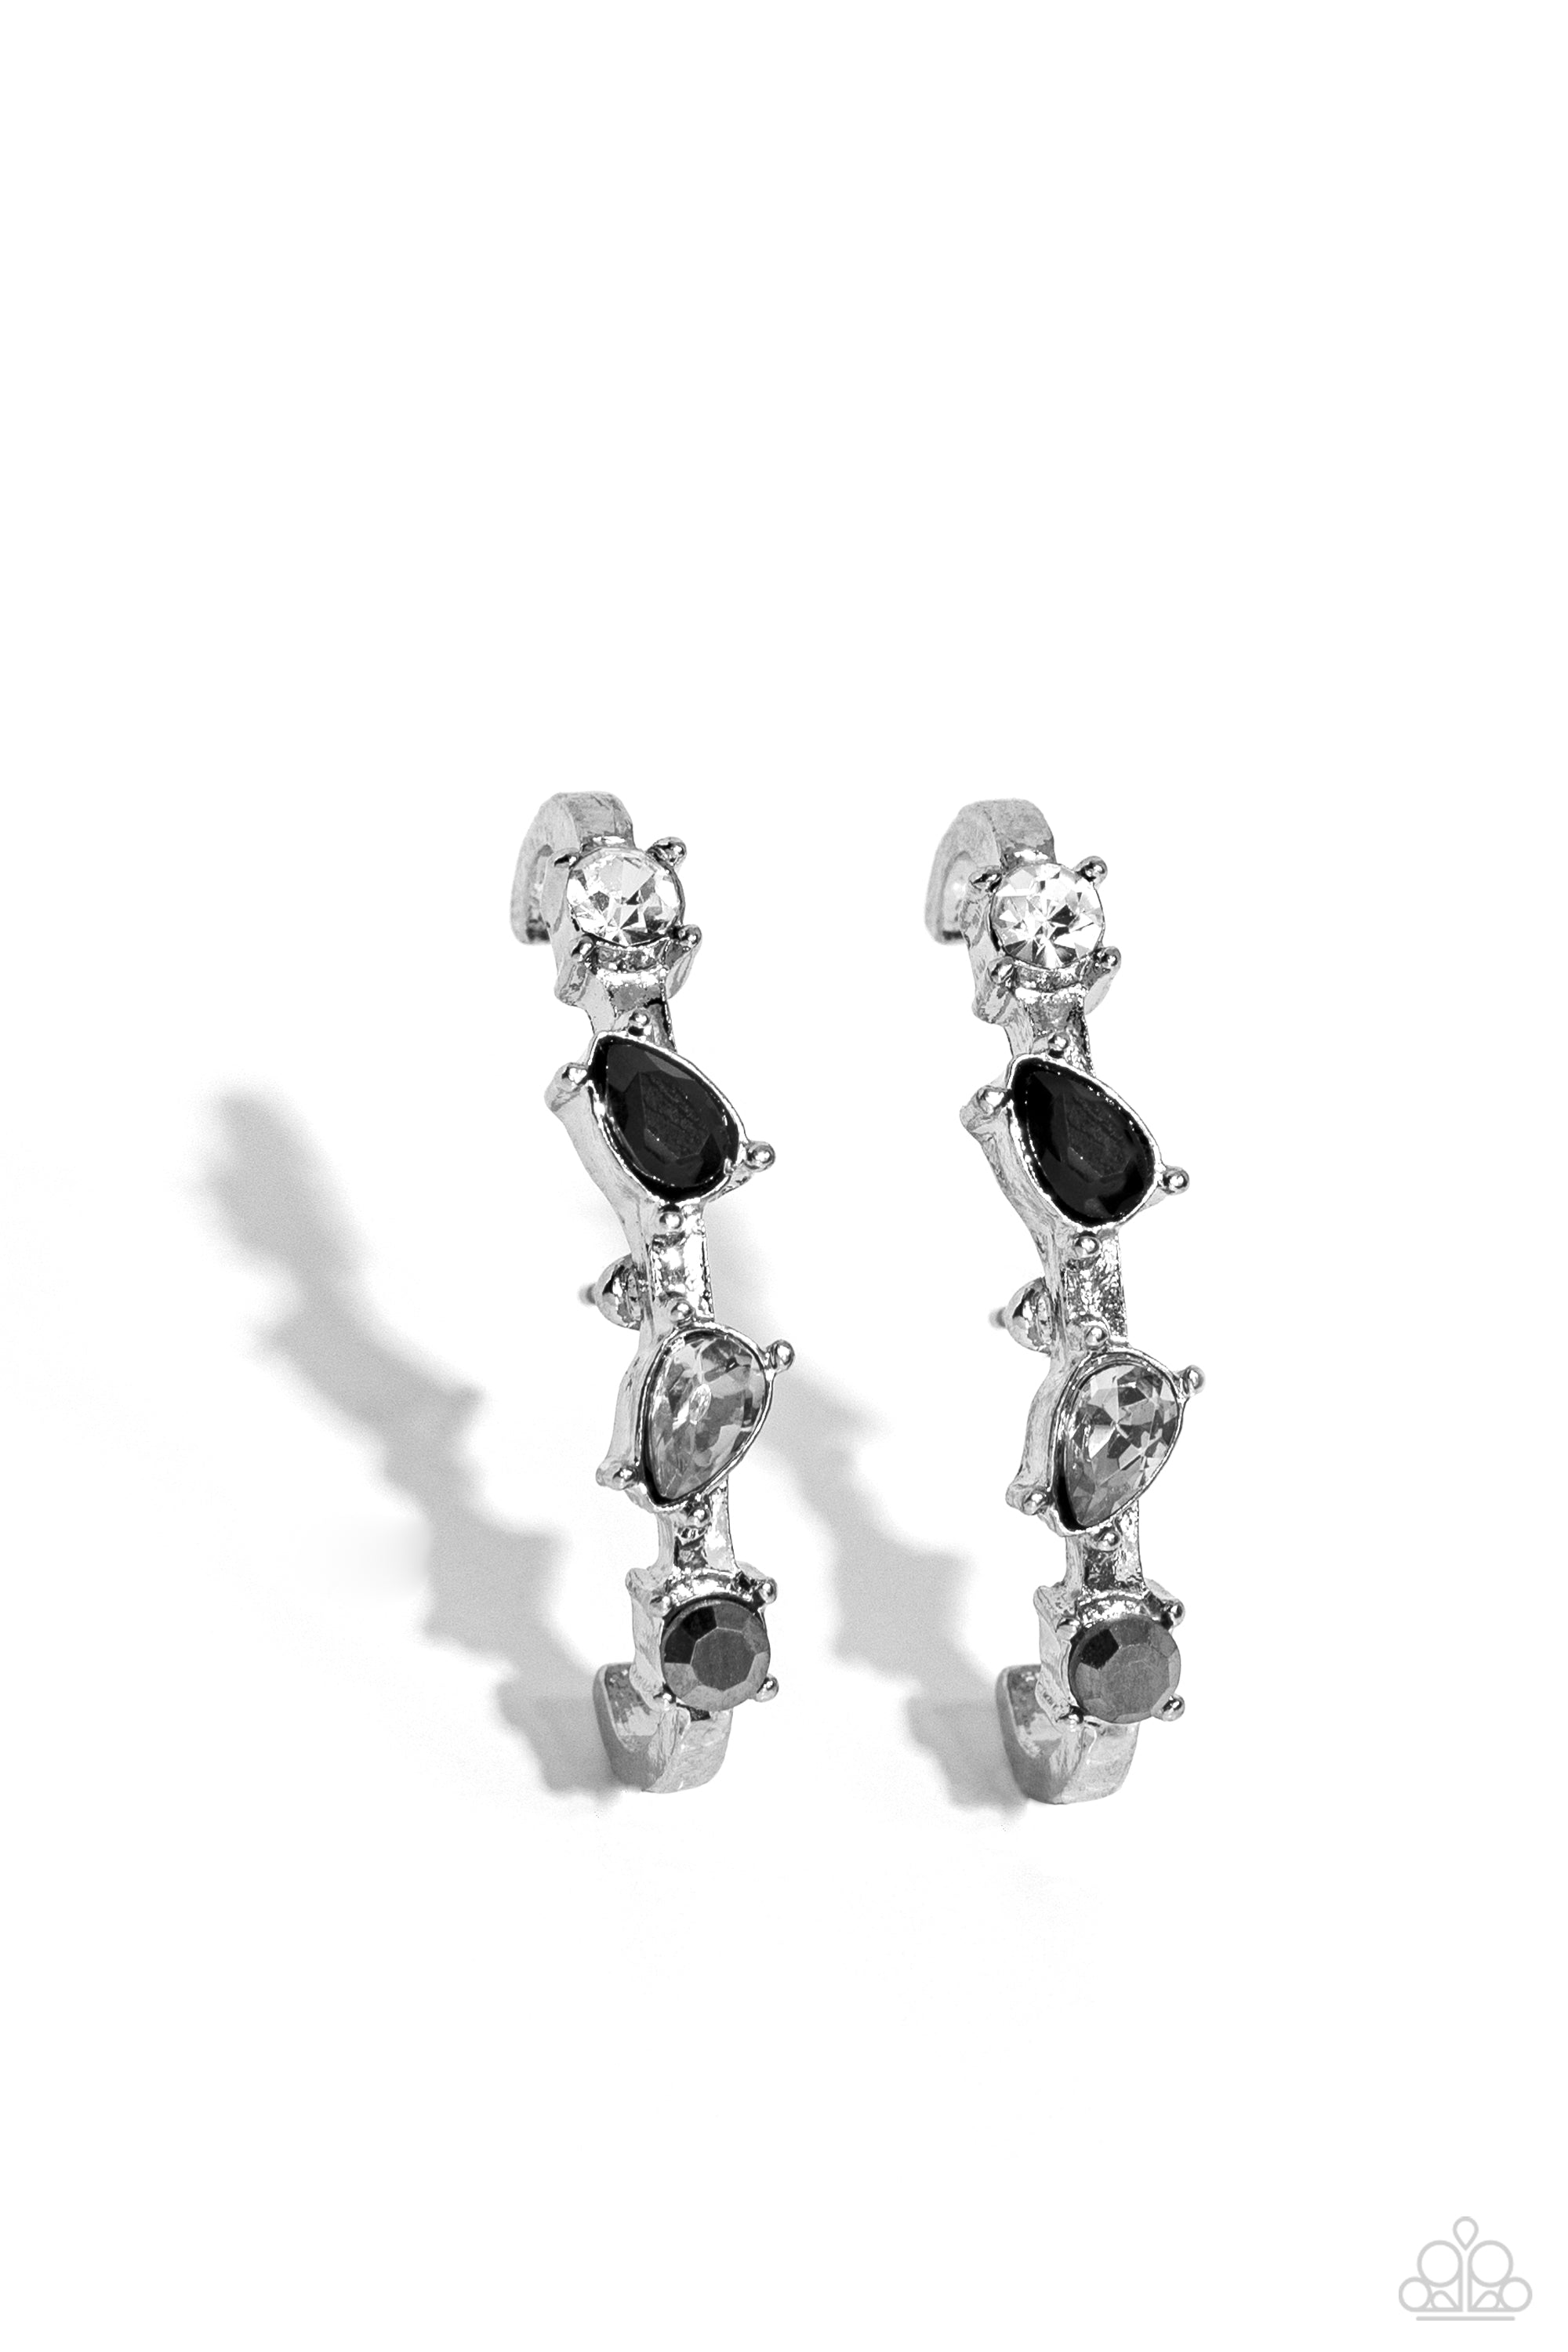 Trendy Twists Black & White Rhinestone Illusion Post Earrings - Paparazzi Accessories- lightbox - CarasShop.com - $5 Jewelry by Cara Jewels